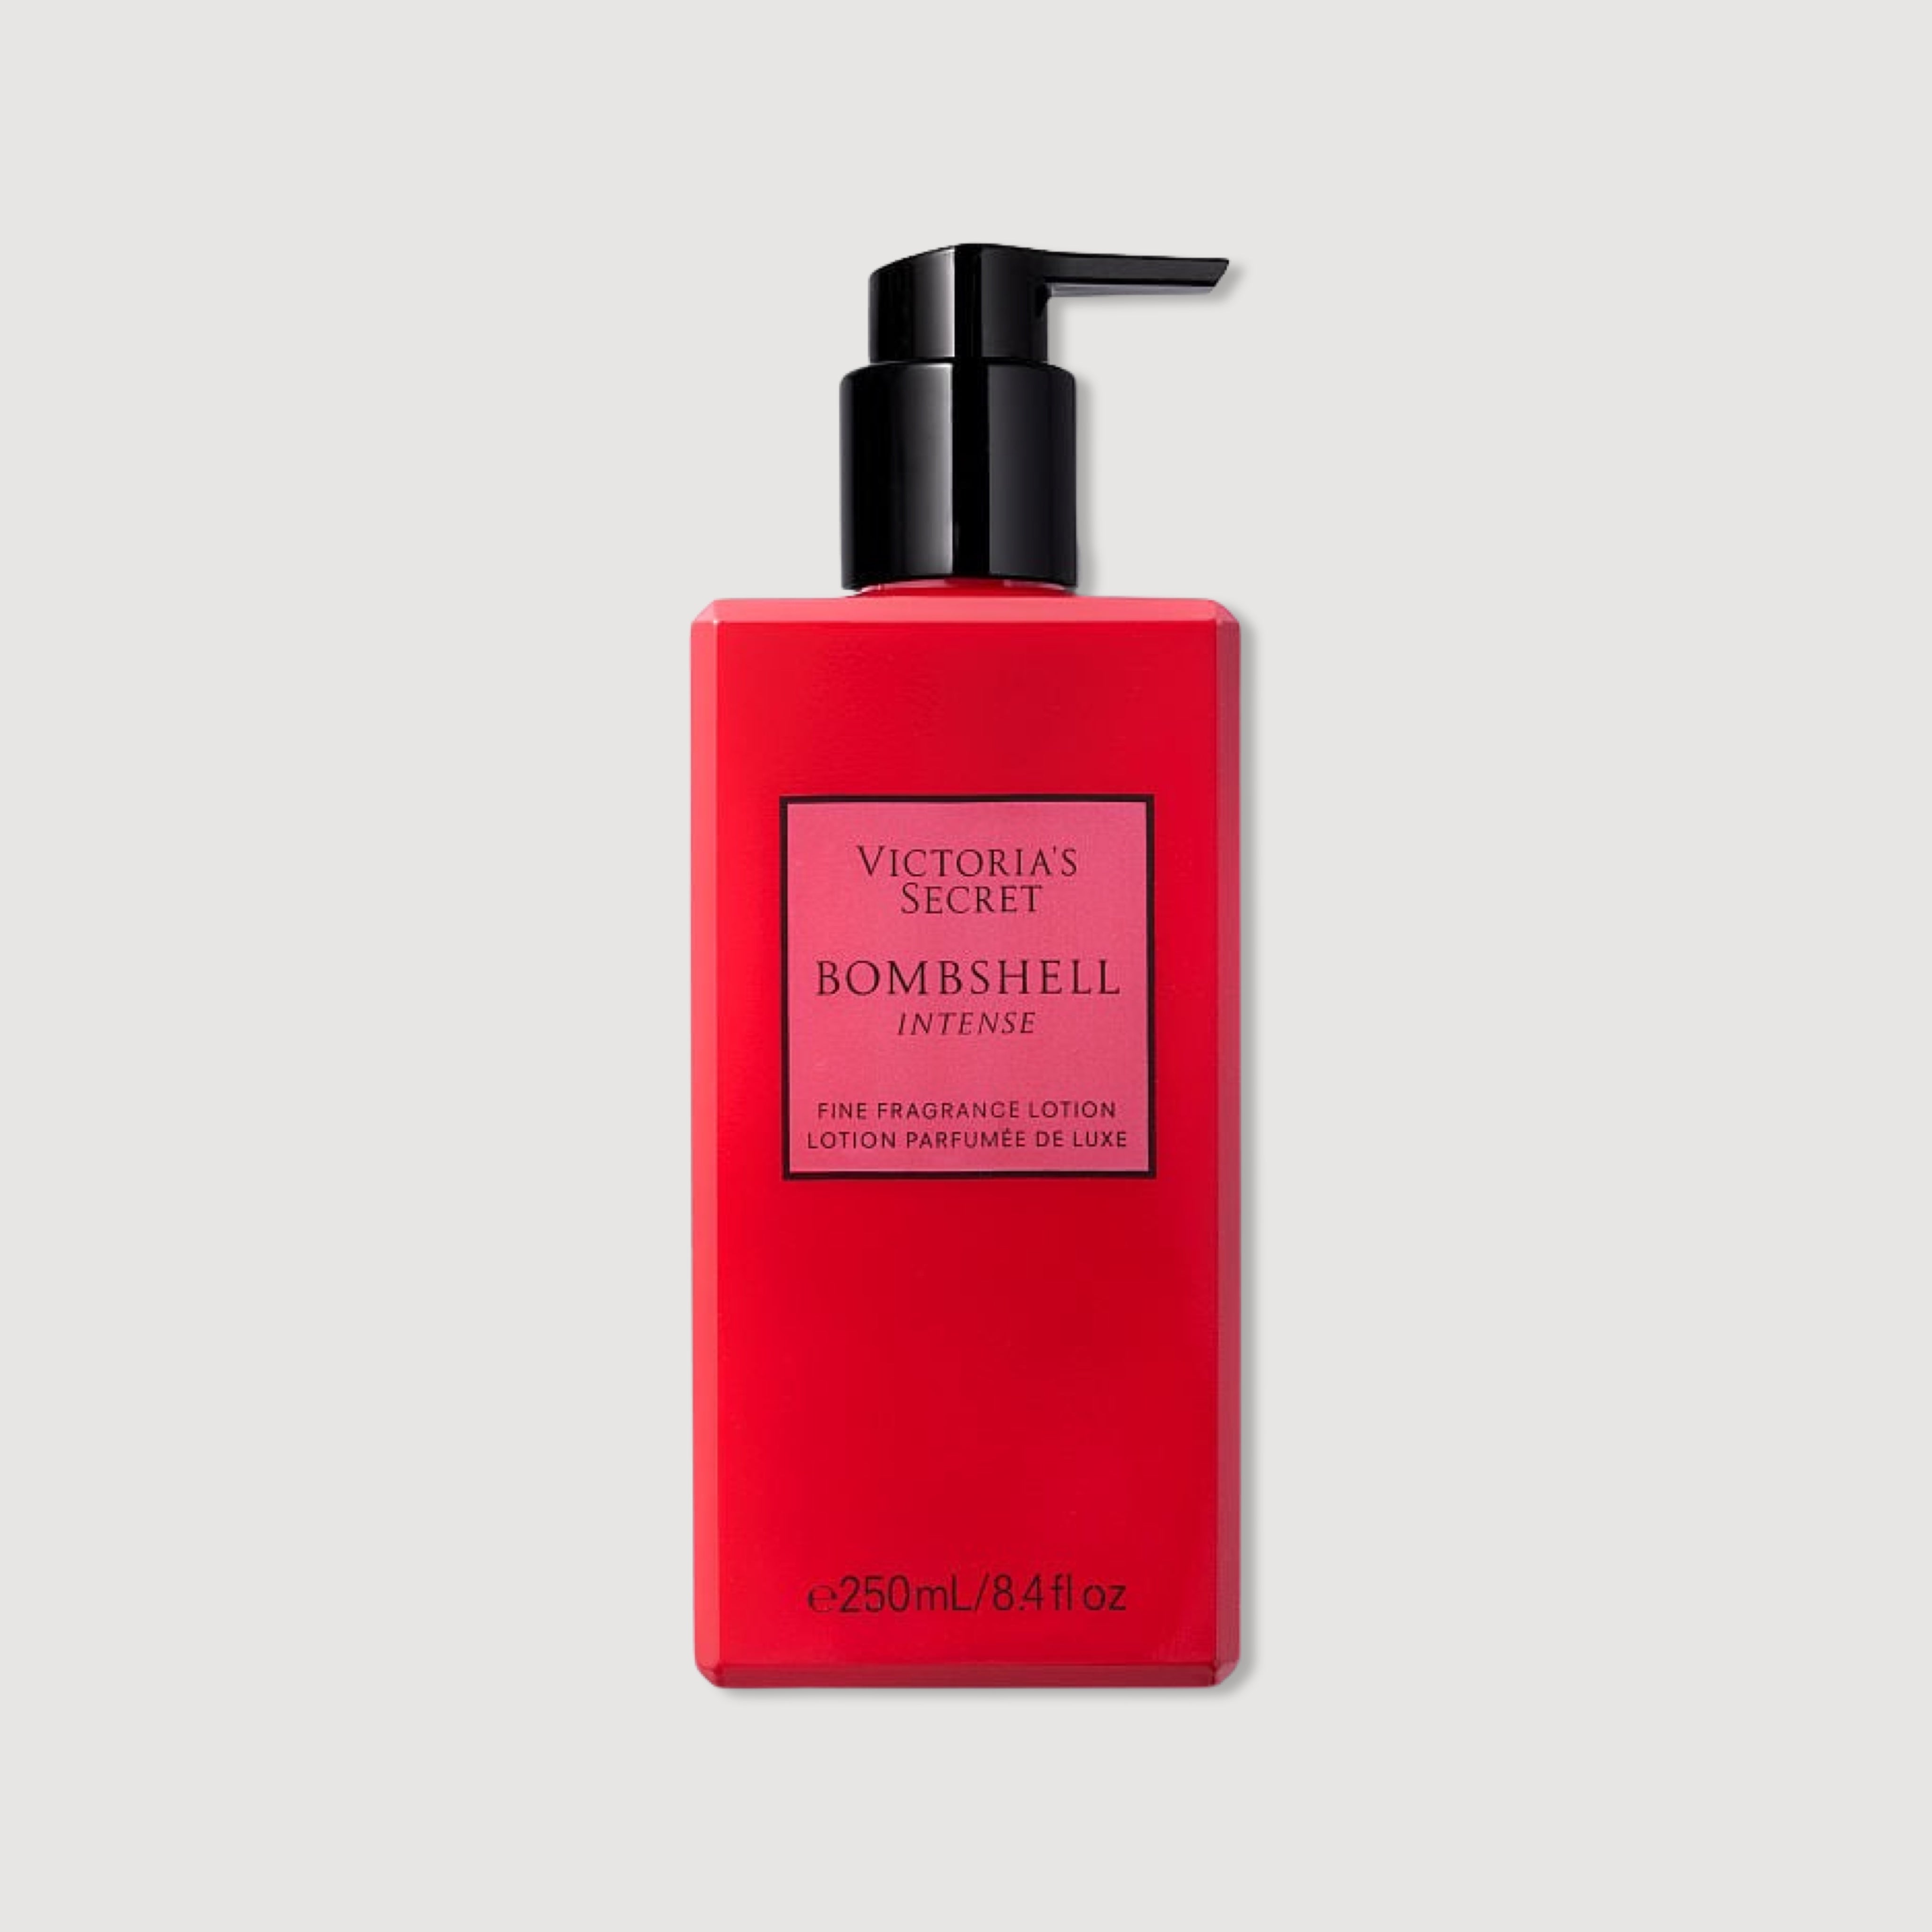 Victoria’s Secret Bombshell Intense Fine Fragrance Lotion.